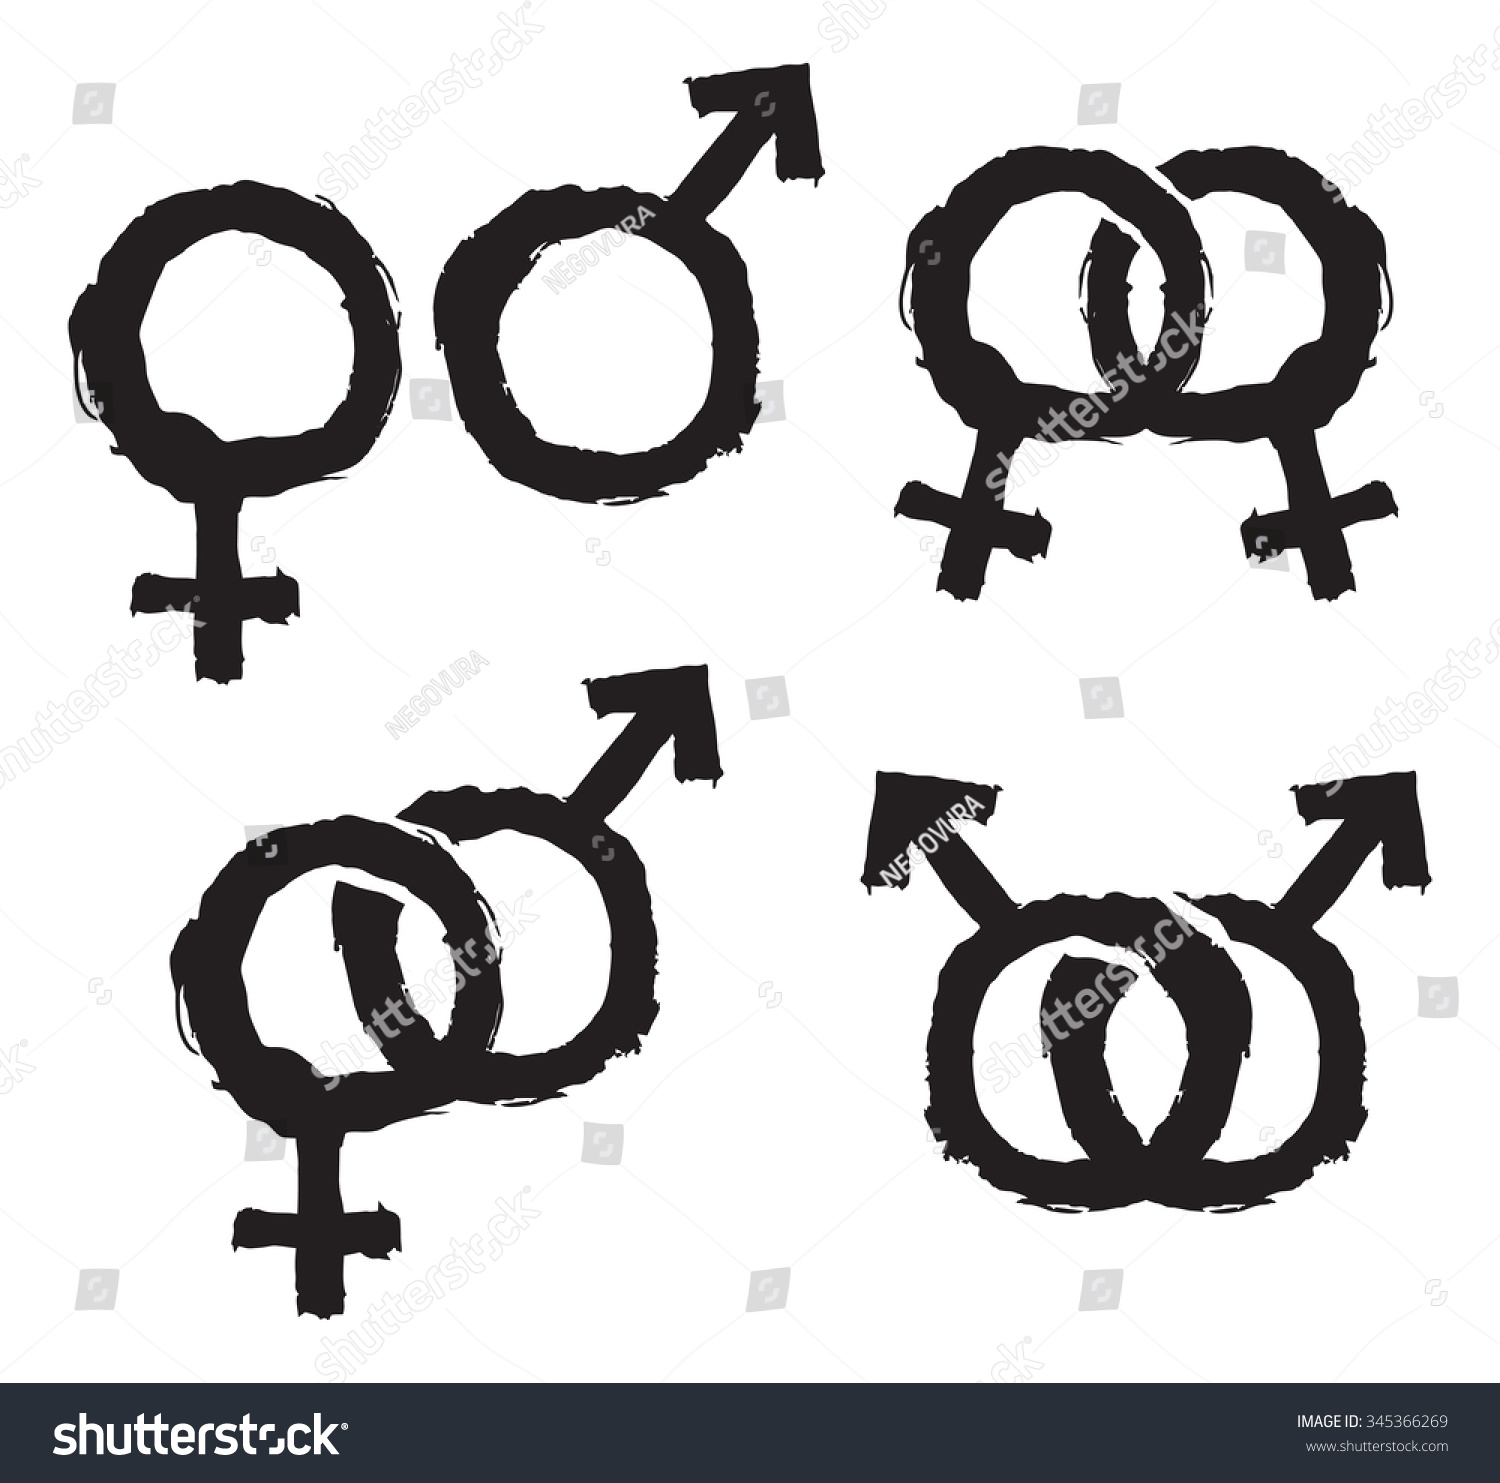 Hand Drawn Male Female Gender Symbols Stock Vector 345366269 Shutterstock